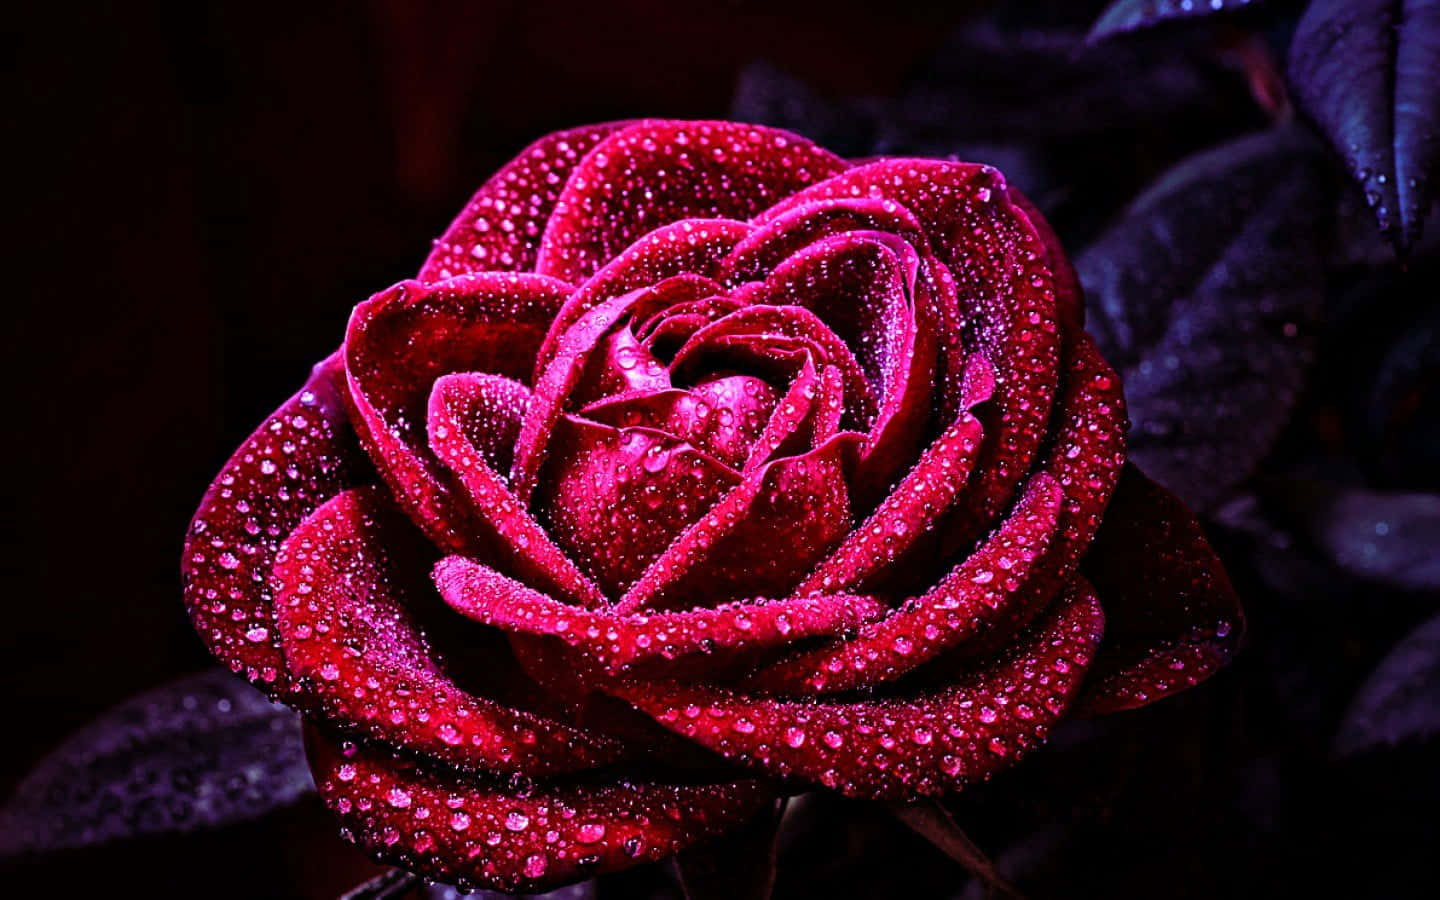 A beautiful Rose in full bloom